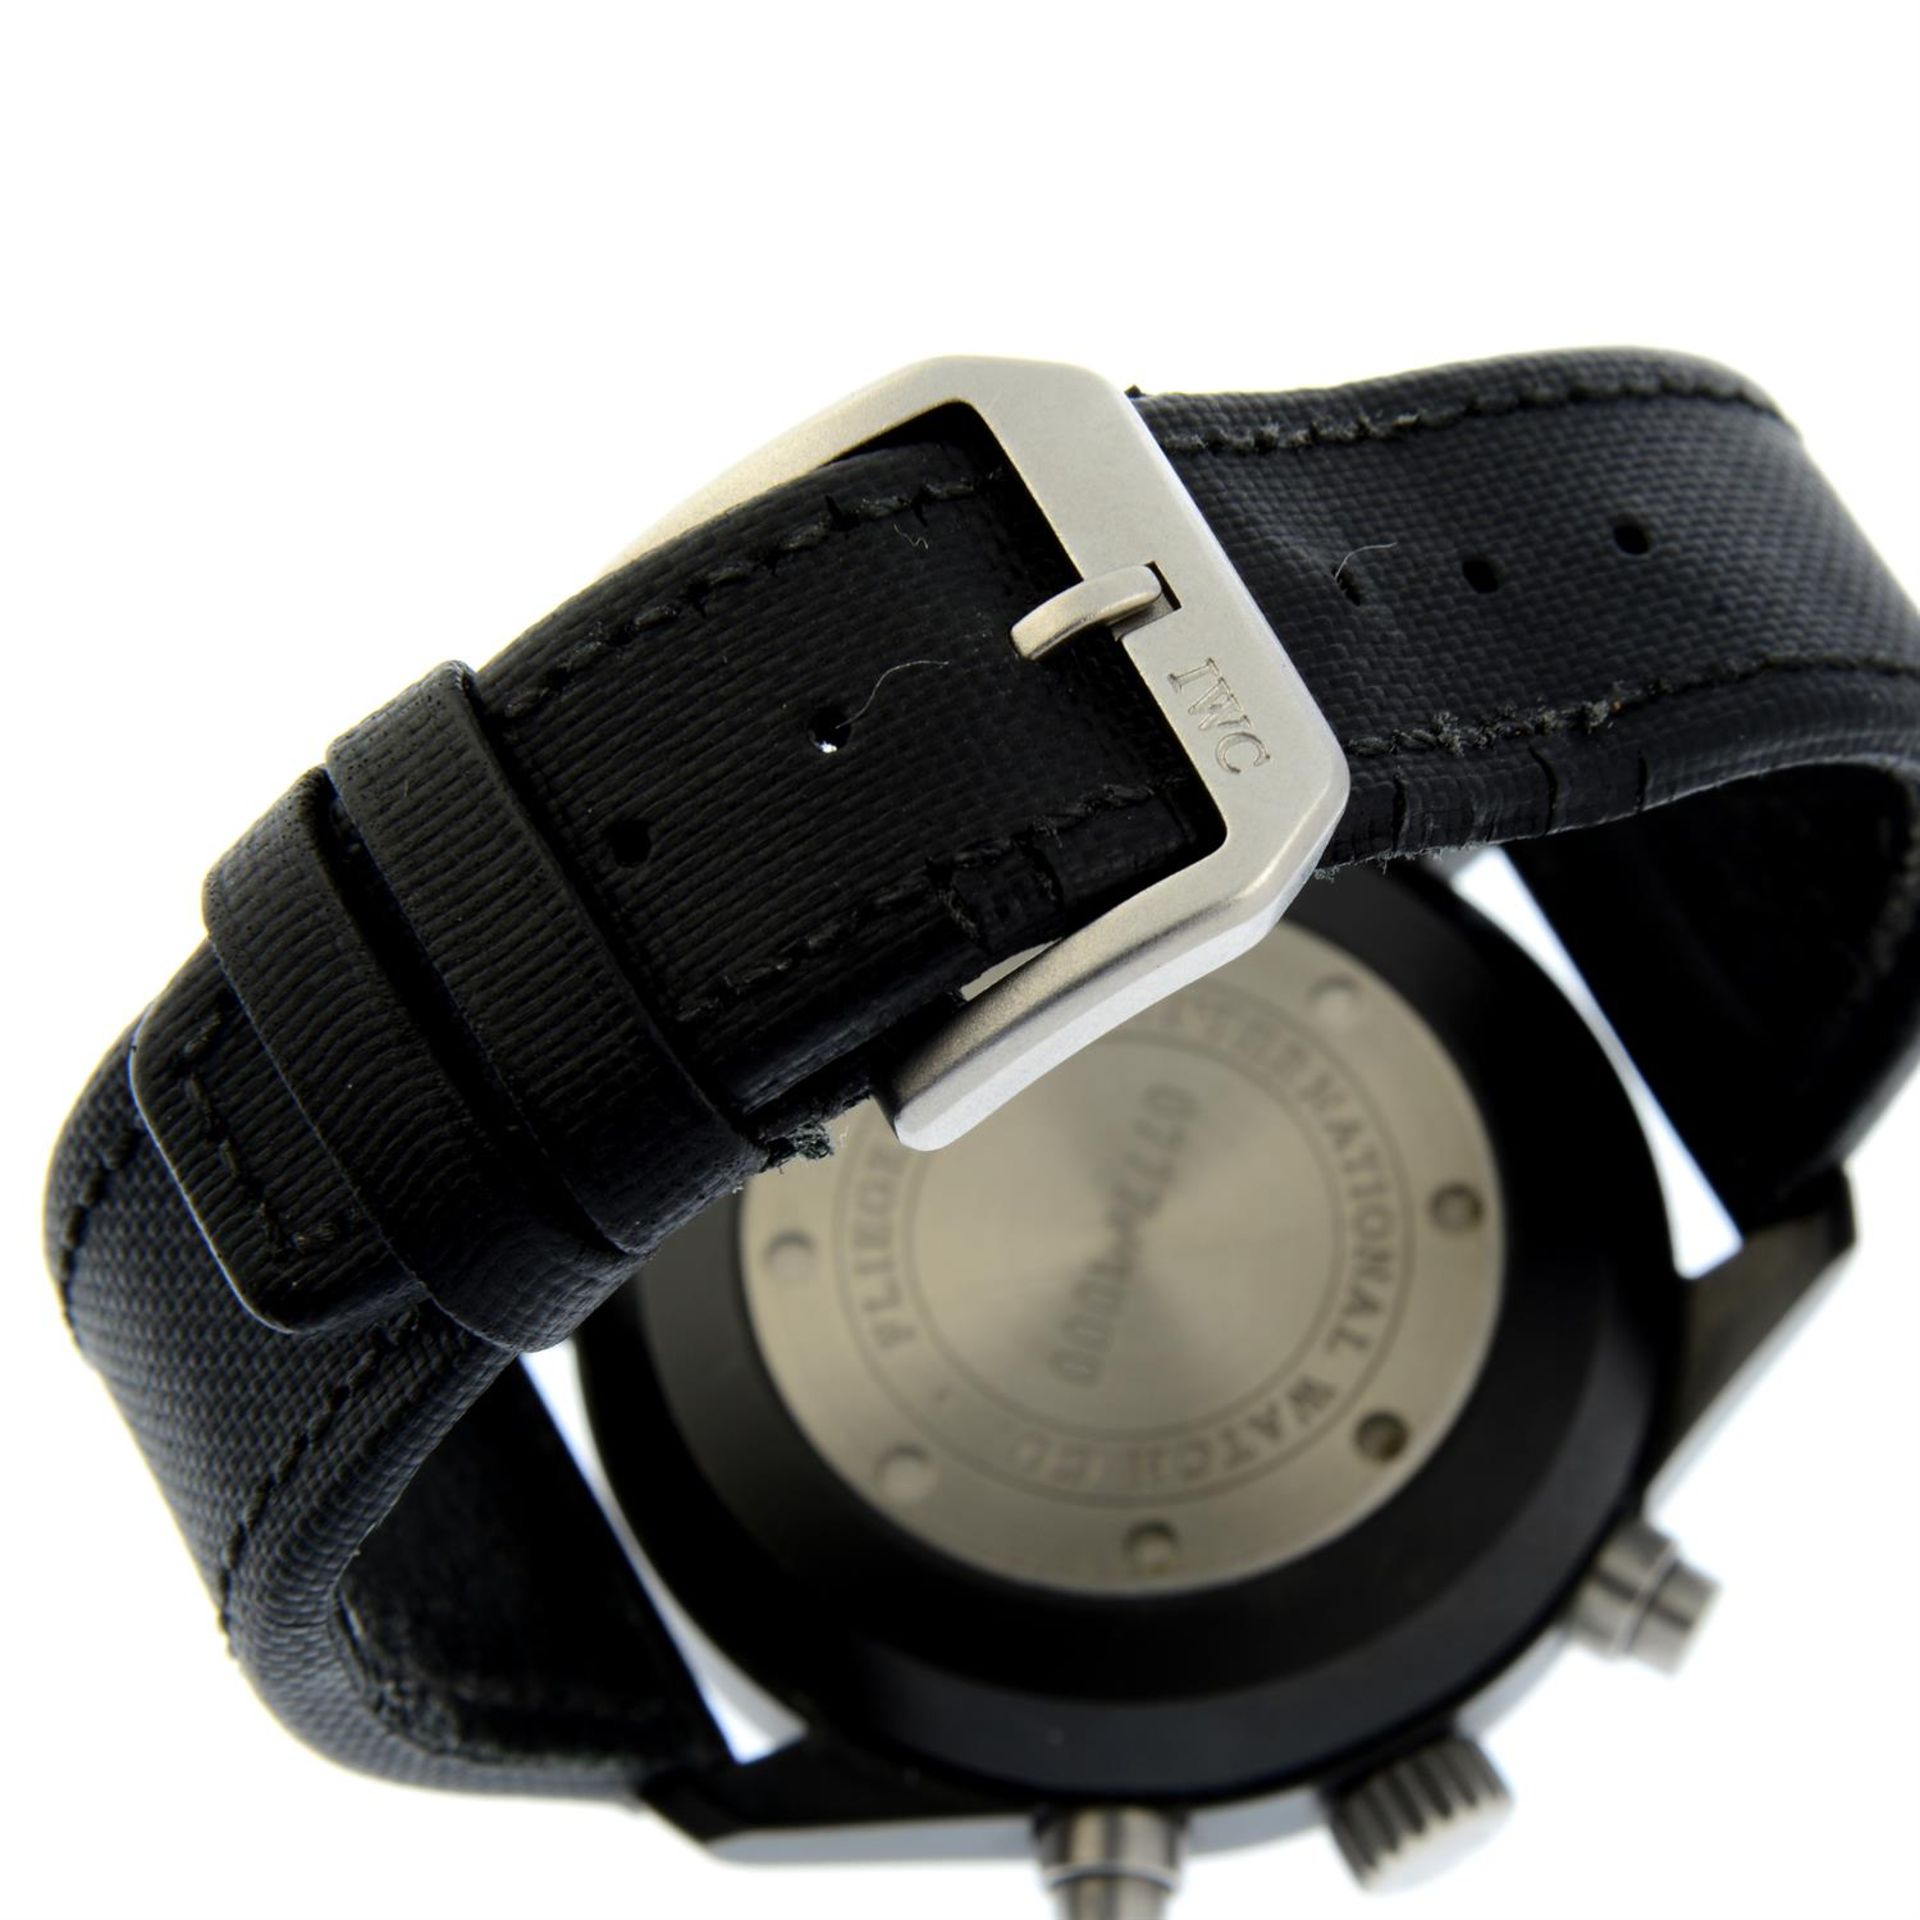 IWC - a ceramic Big Pilot Double Chronograph wrist watch, 44mm. - Image 2 of 6